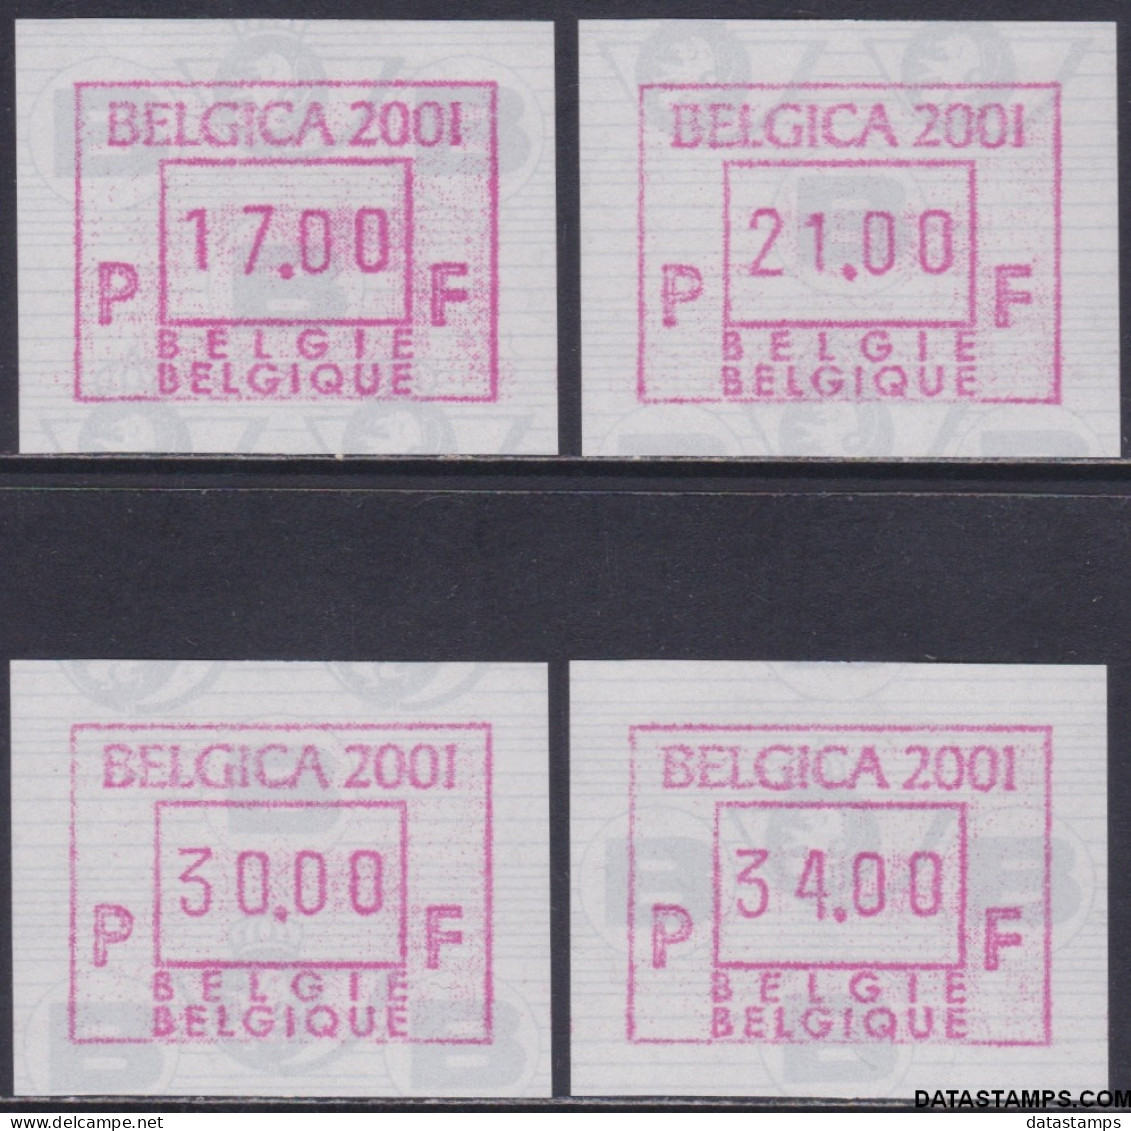 België 2001 - Mi:autom 45, Yv:TD 53, OBP:ATM 105 Set, Machine Stamp - XX - Belgica 2001 - Postfris